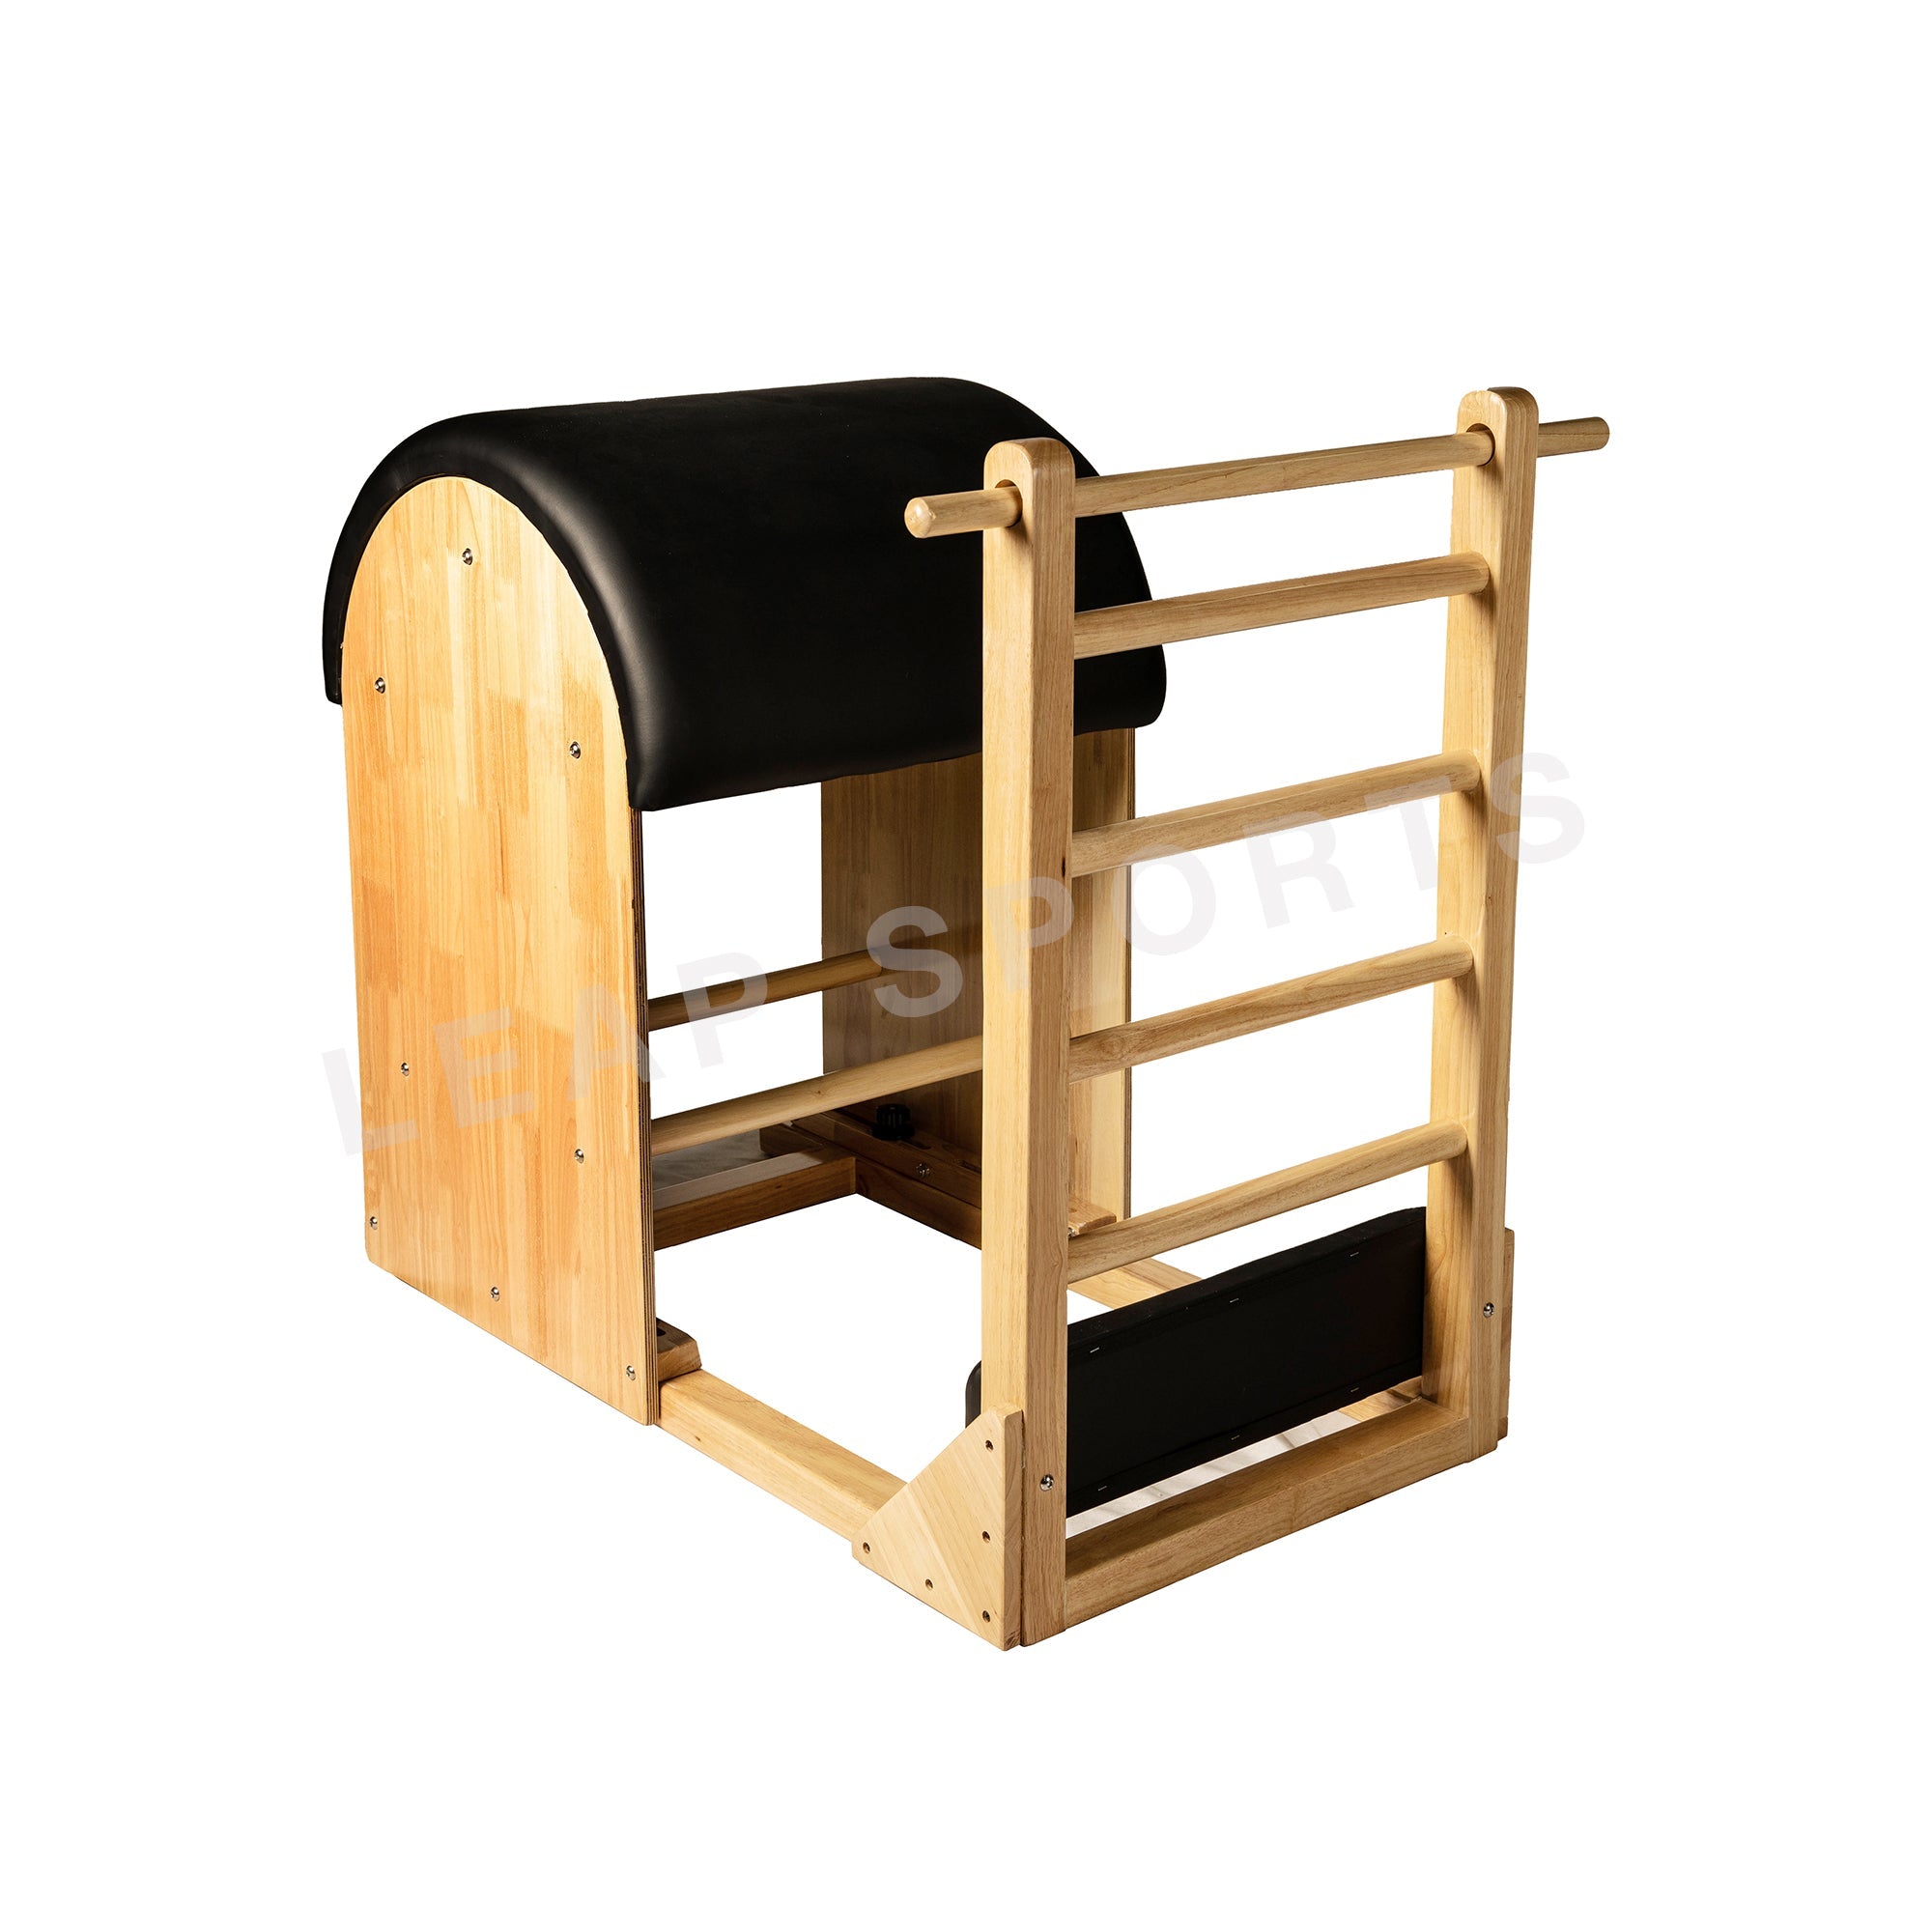 Equipment Series: The Ladder Barrel